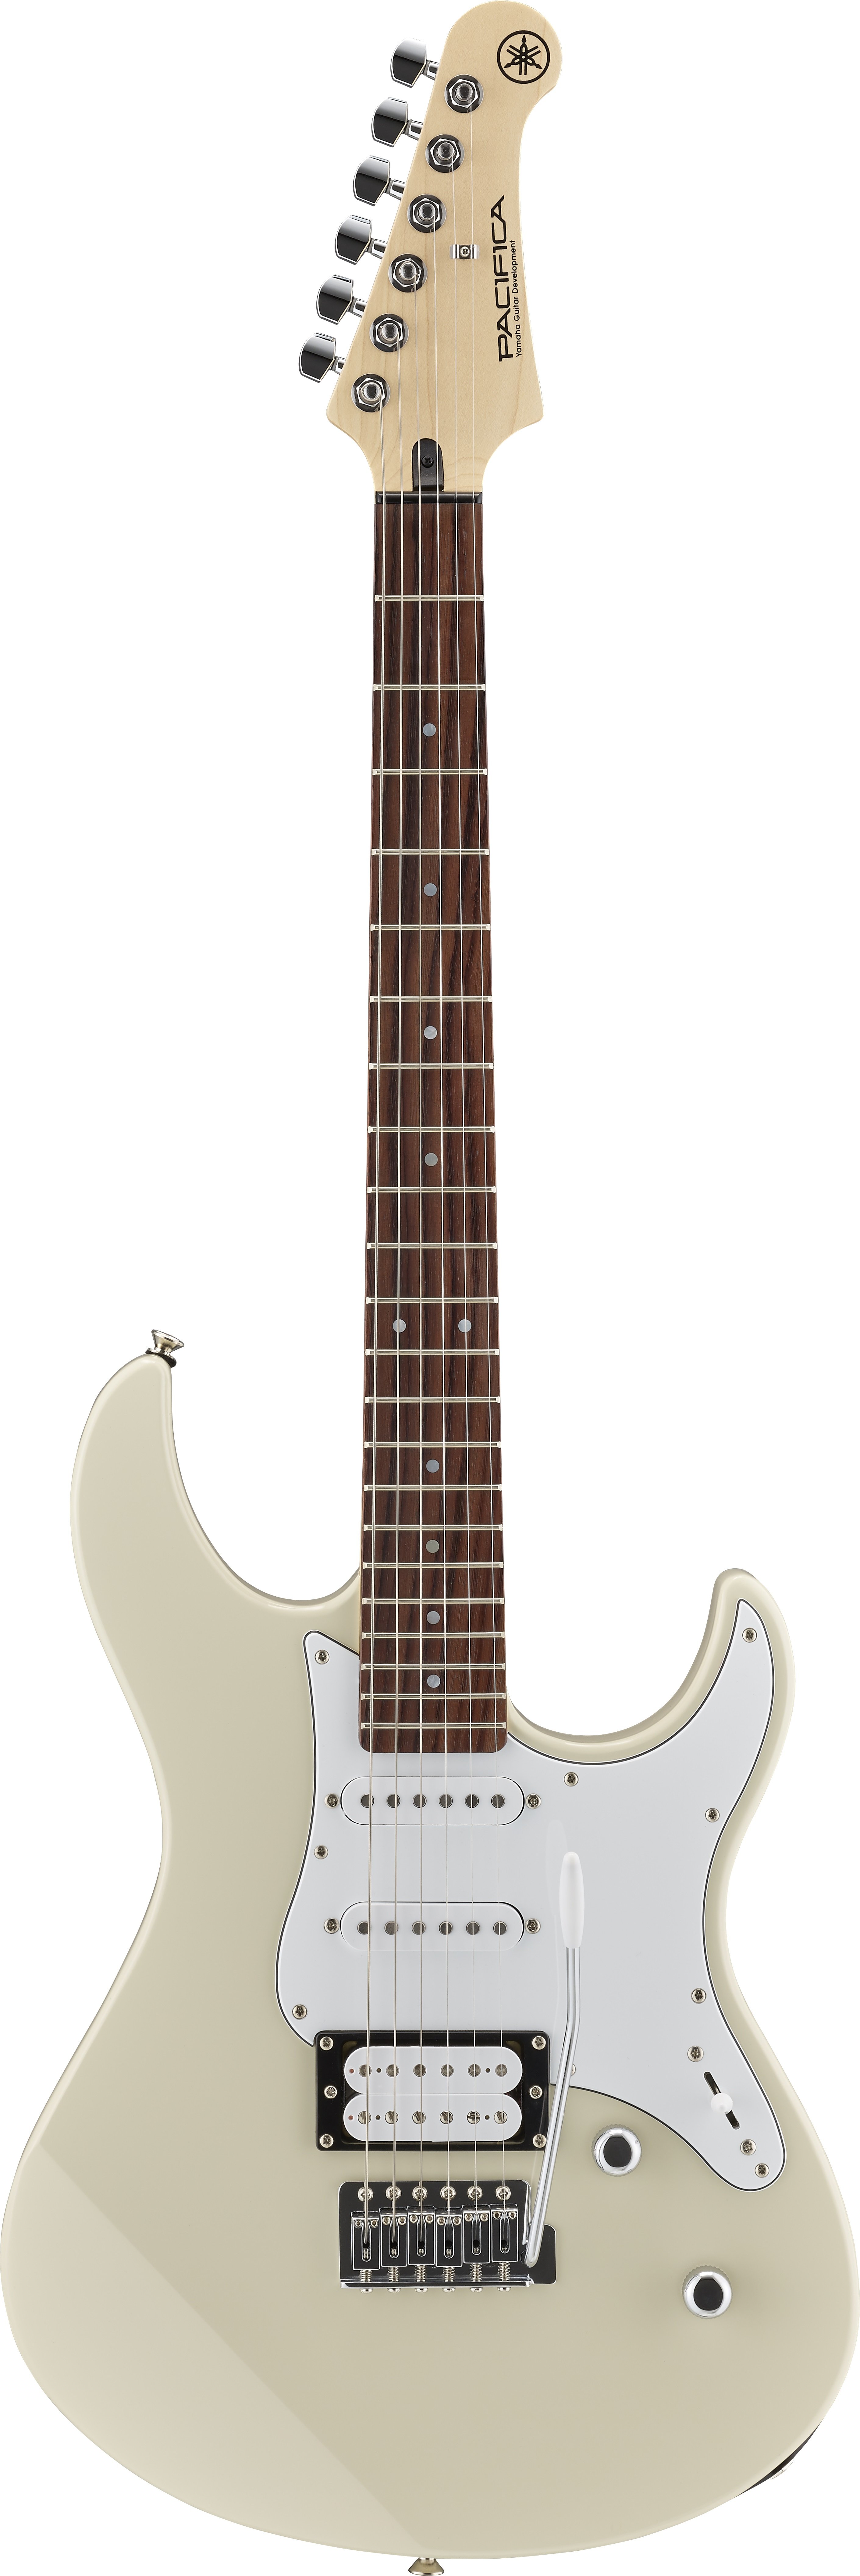 PAC012, PAC120, PAC112 Electric Guitars - Yamaha USA